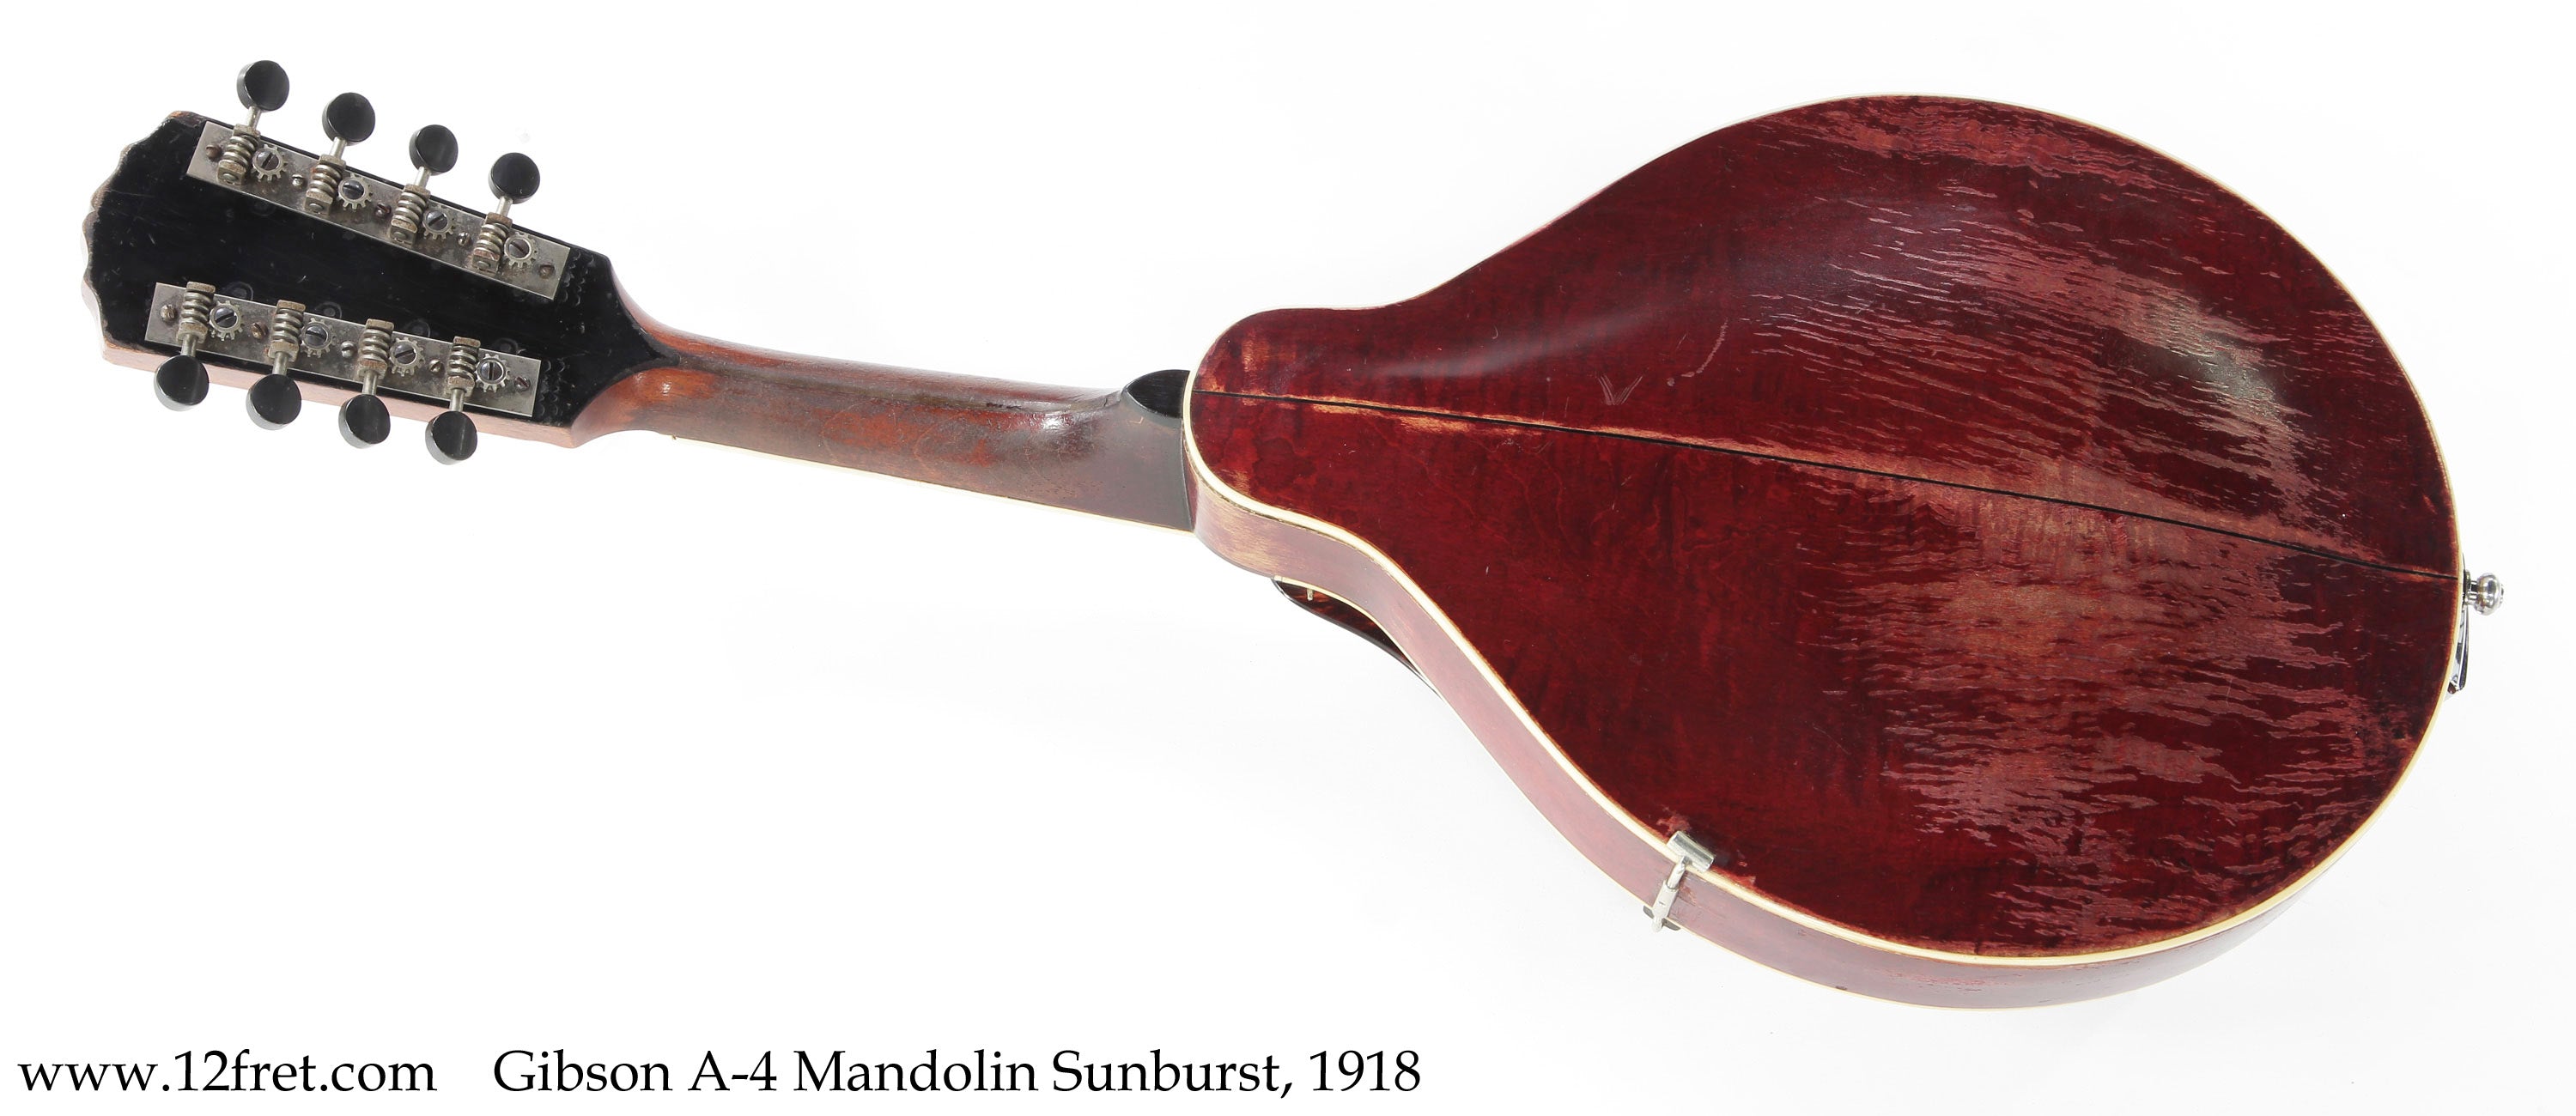 Gibson A-4 Mandolin Sunburst, 1918 - The Twelfth Fret